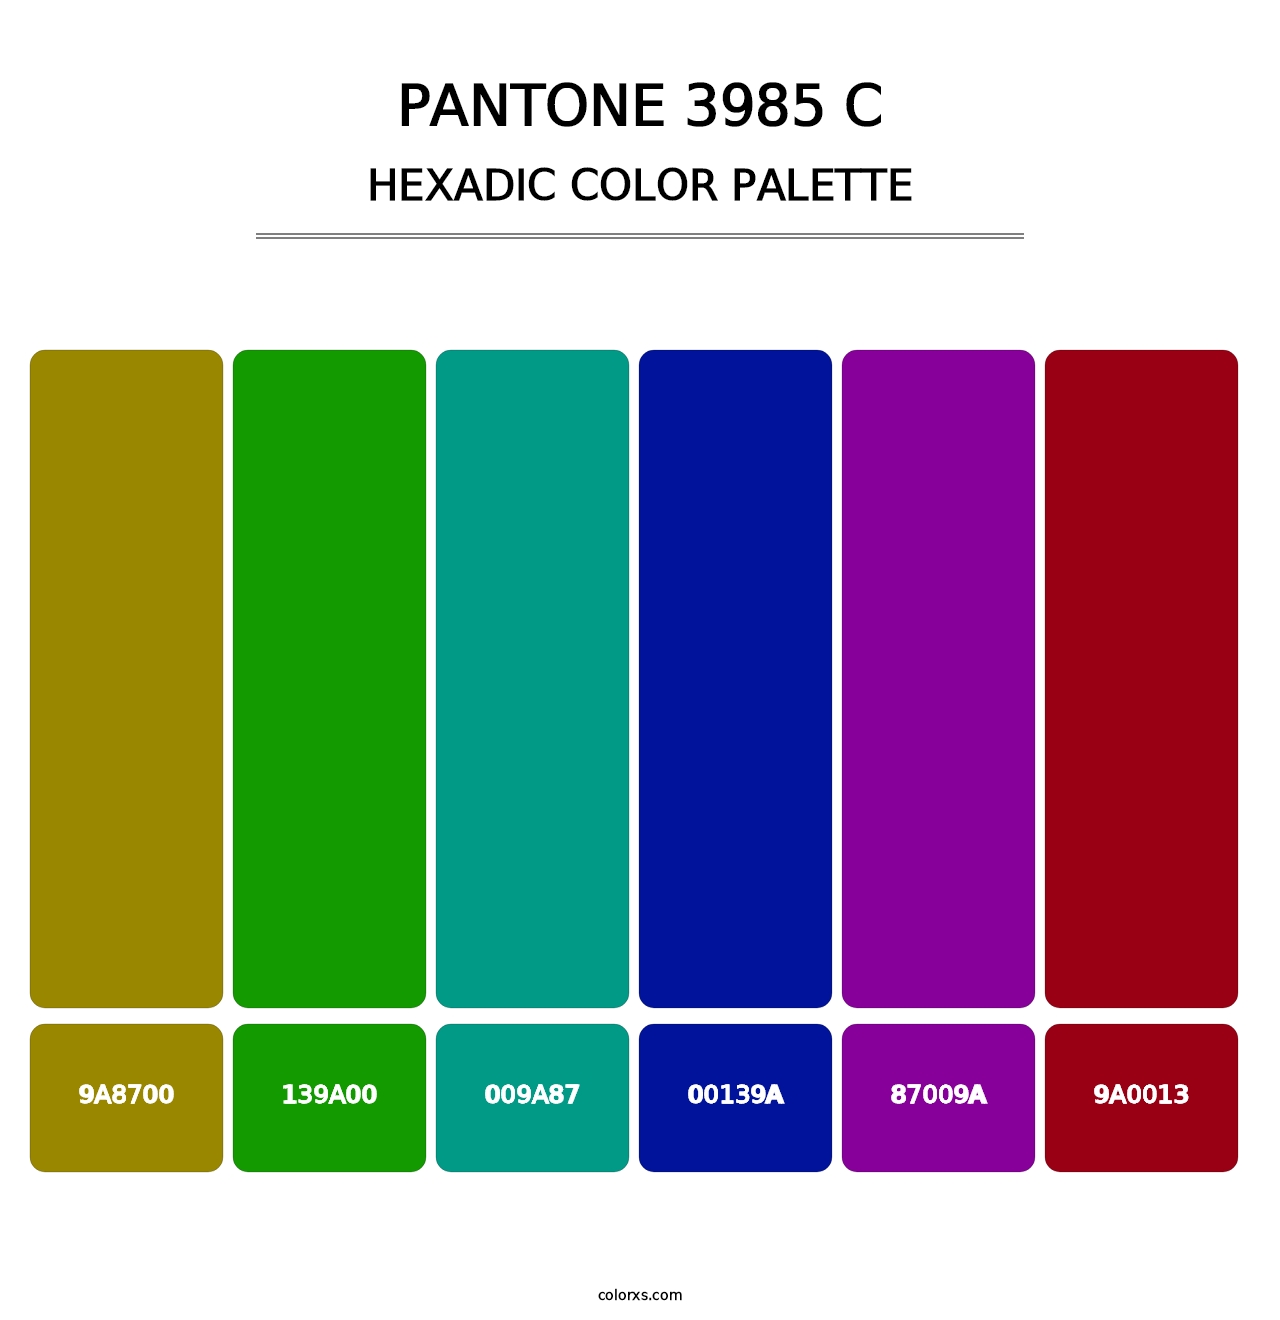 PANTONE 3985 C - Hexadic Color Palette